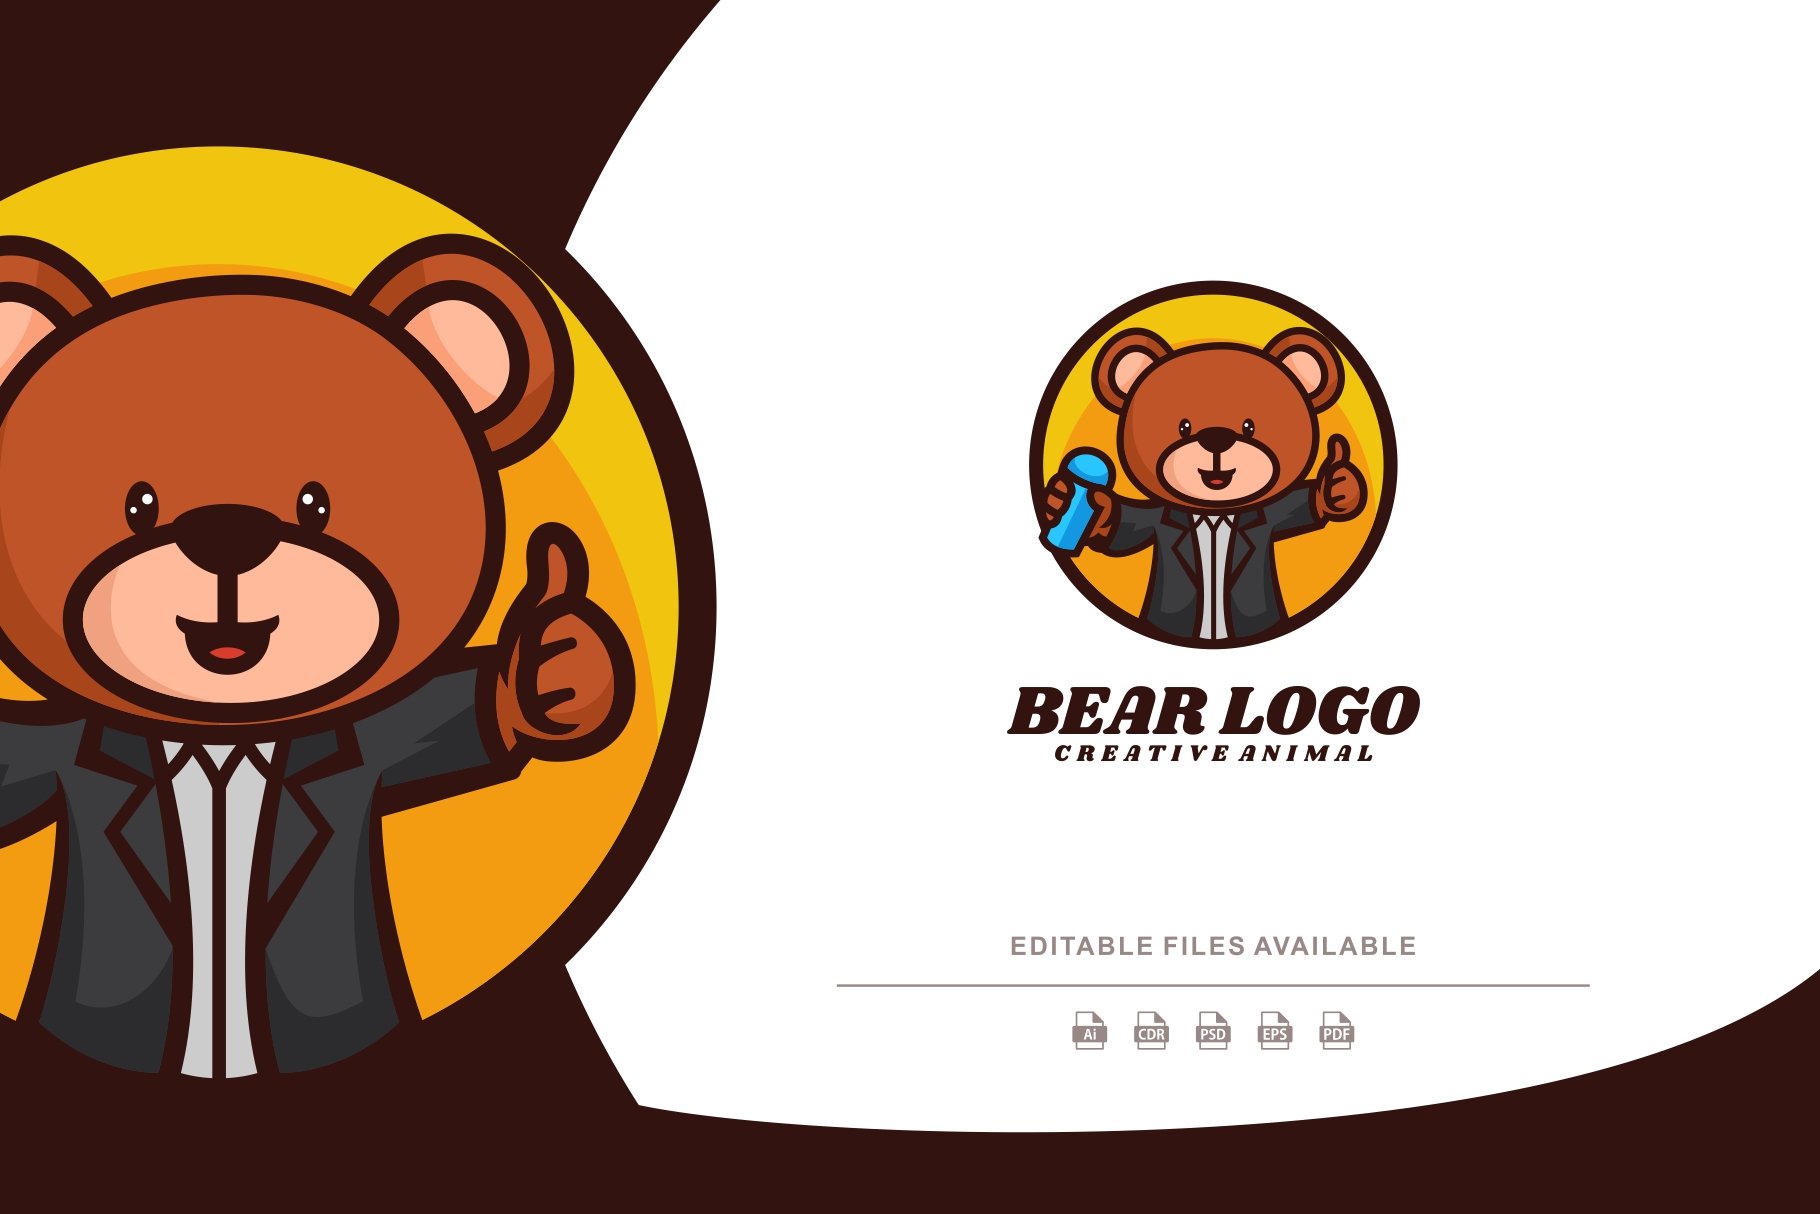 Bear Simple Mascot Logo cover image.